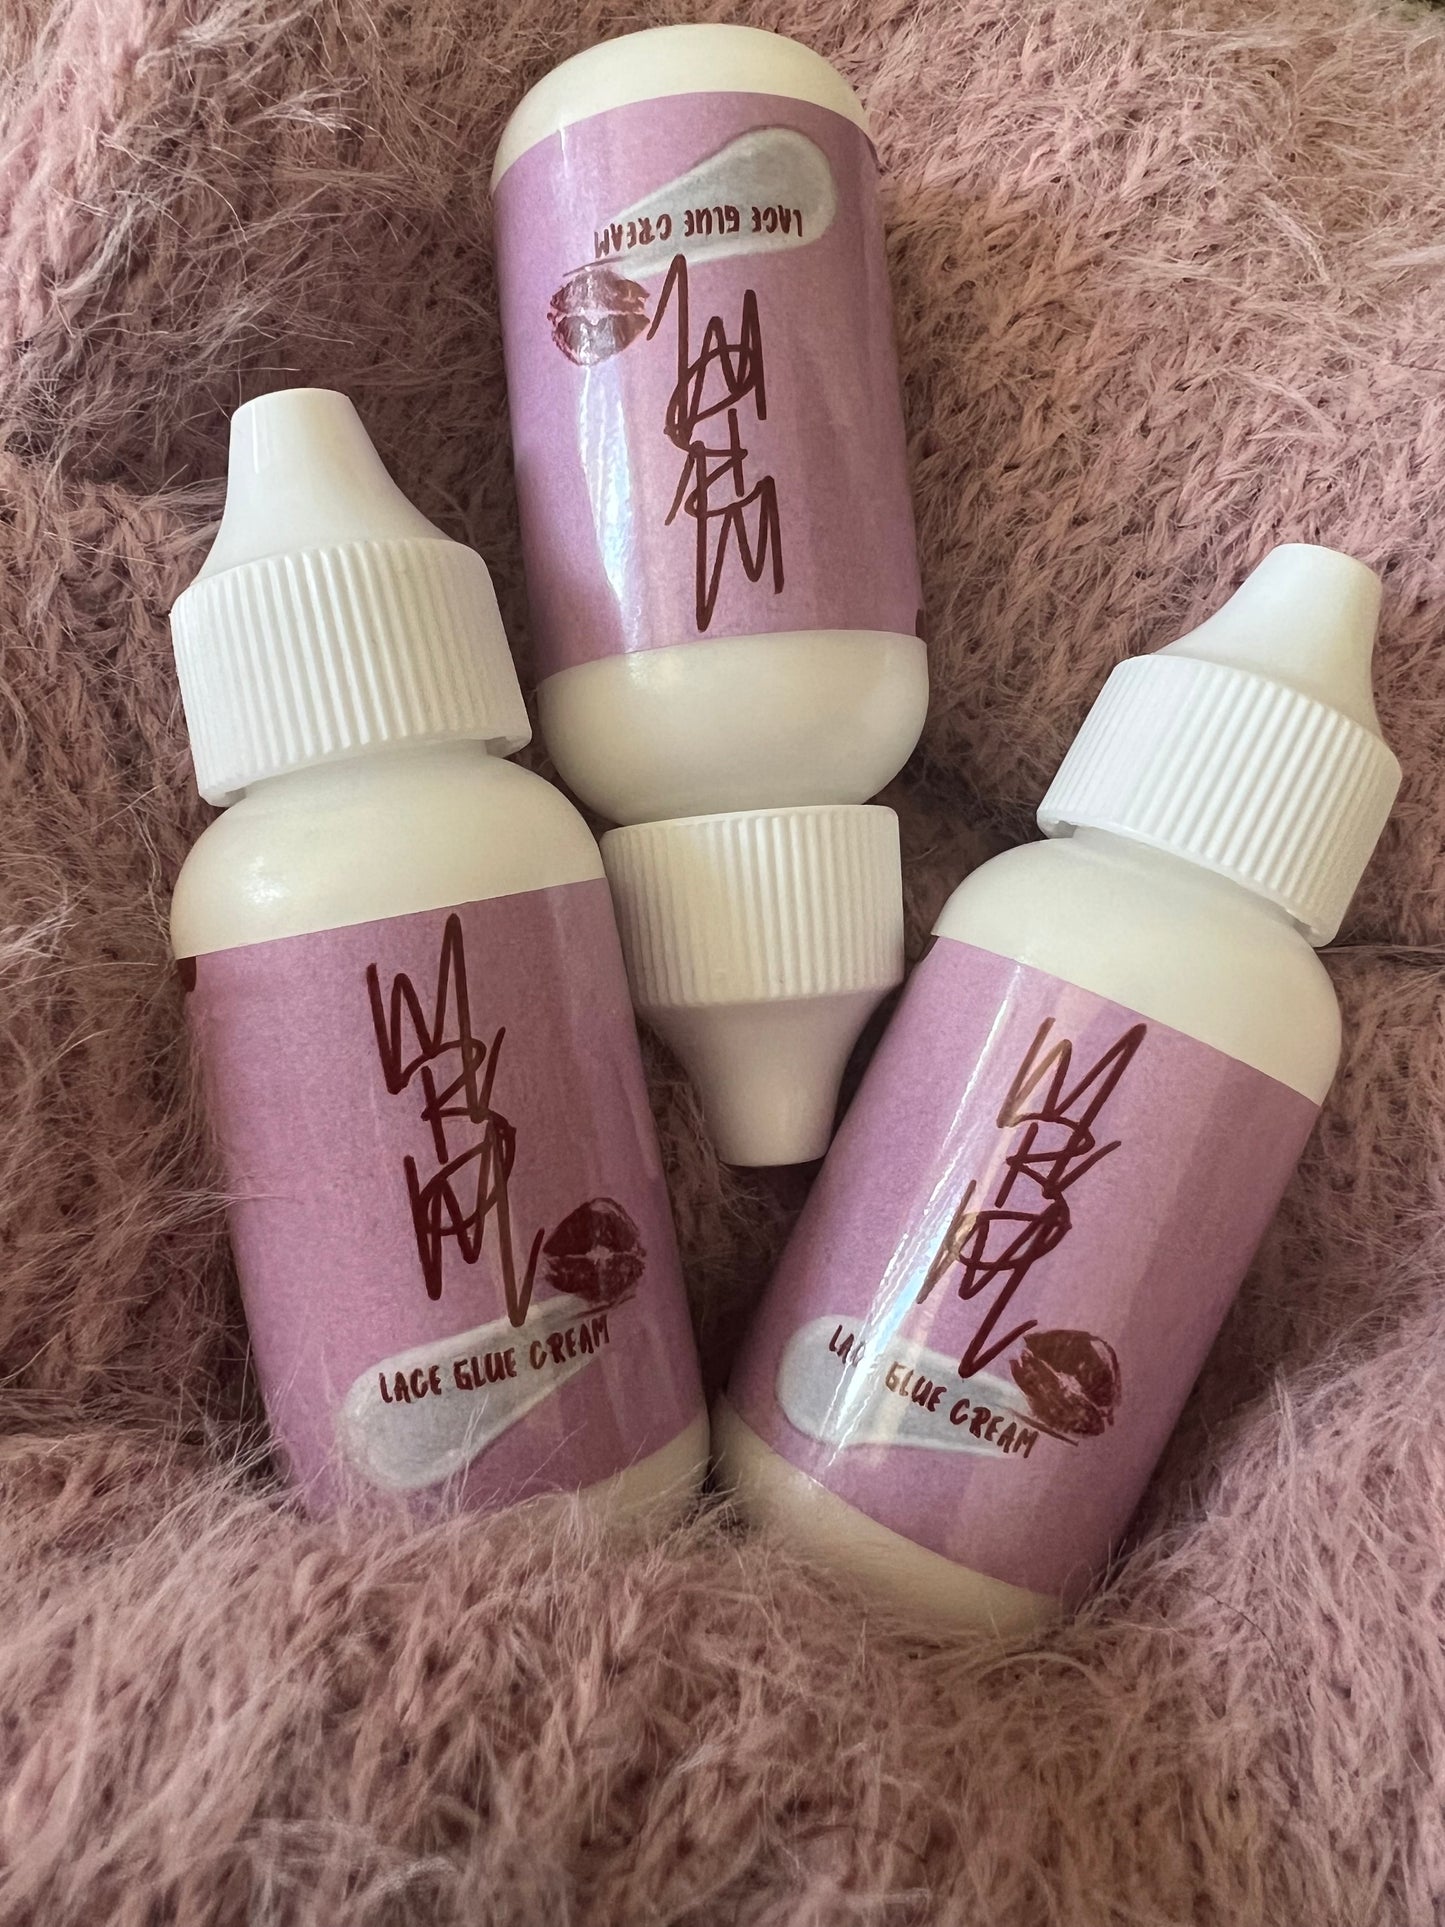 MBM - Lace Glue Cream